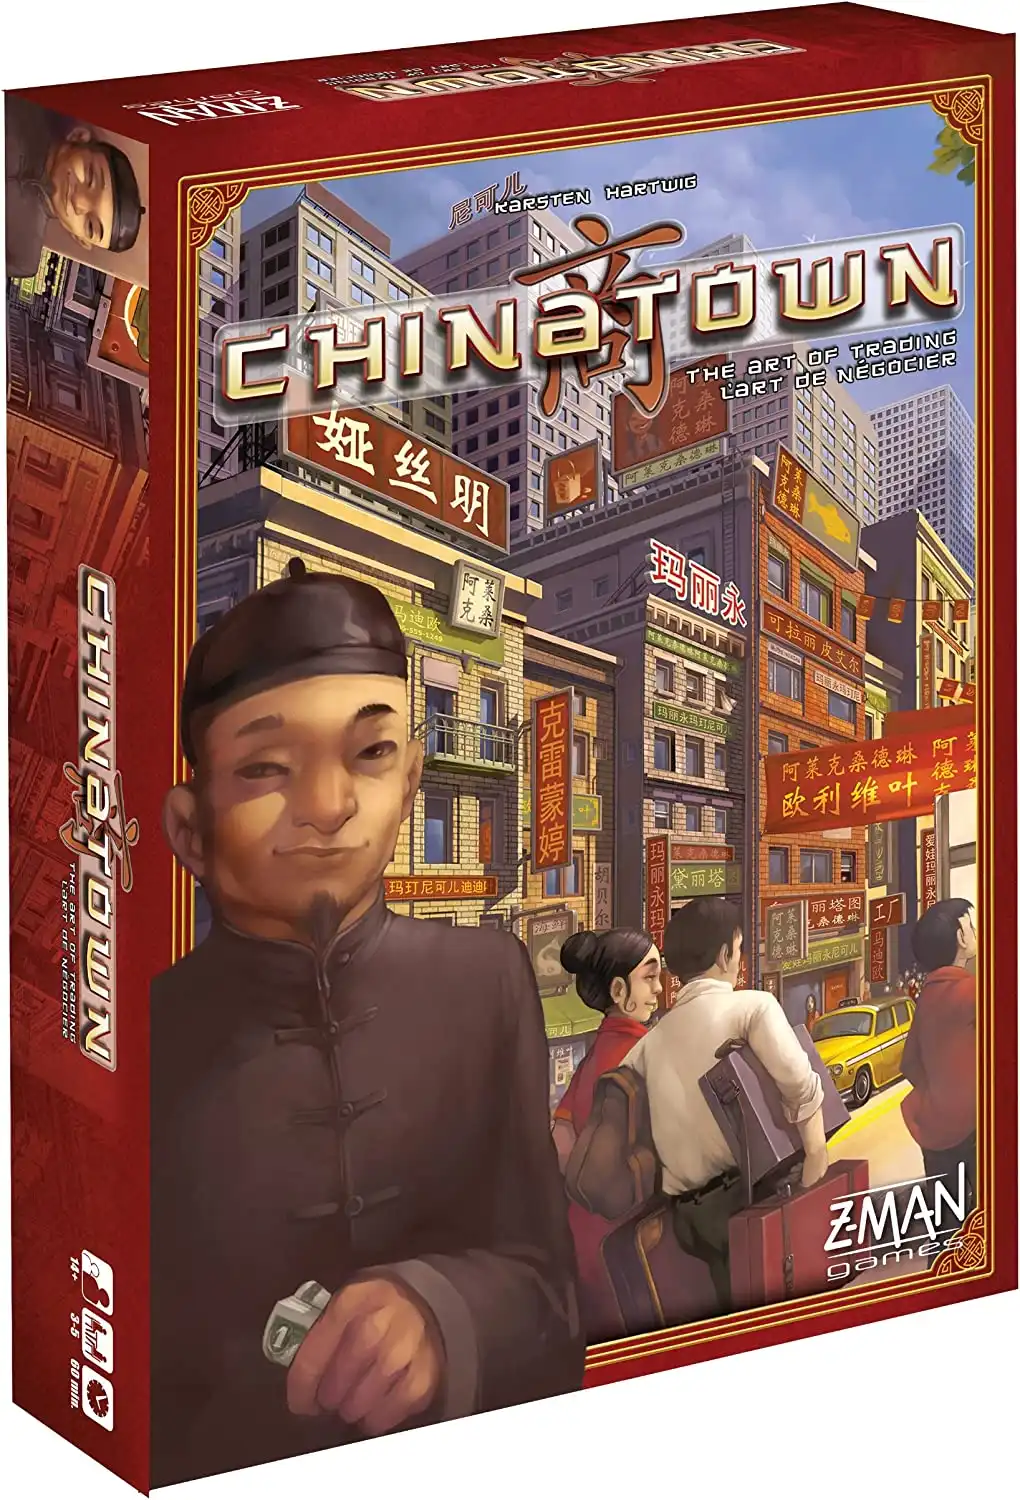 Chinatown (1999) board game box | Source: Z-Man Games